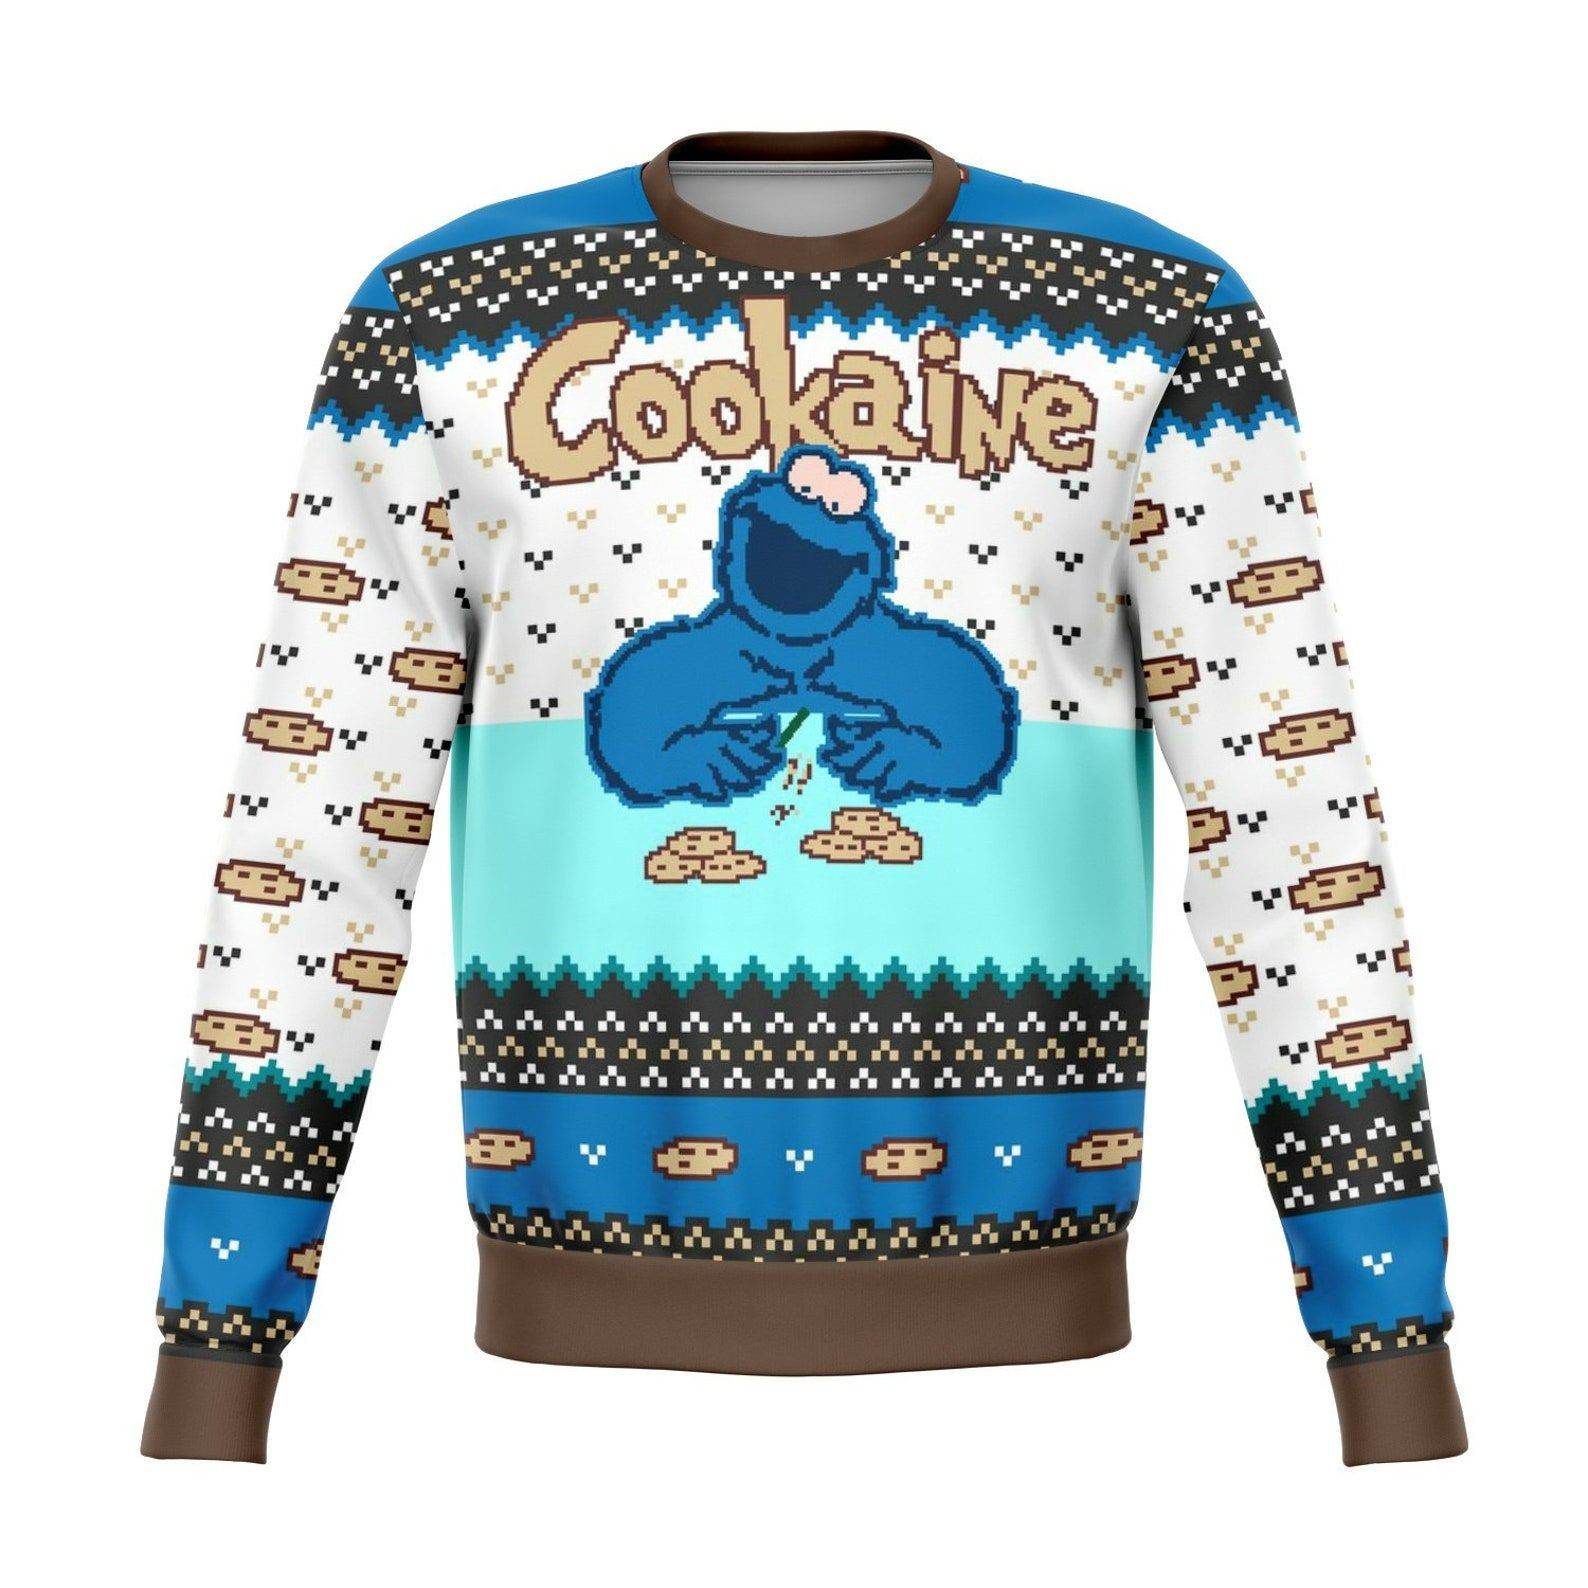 Cookaine Monster Ugly Christmas Sweater All Over Print Sweatshirt Ugly